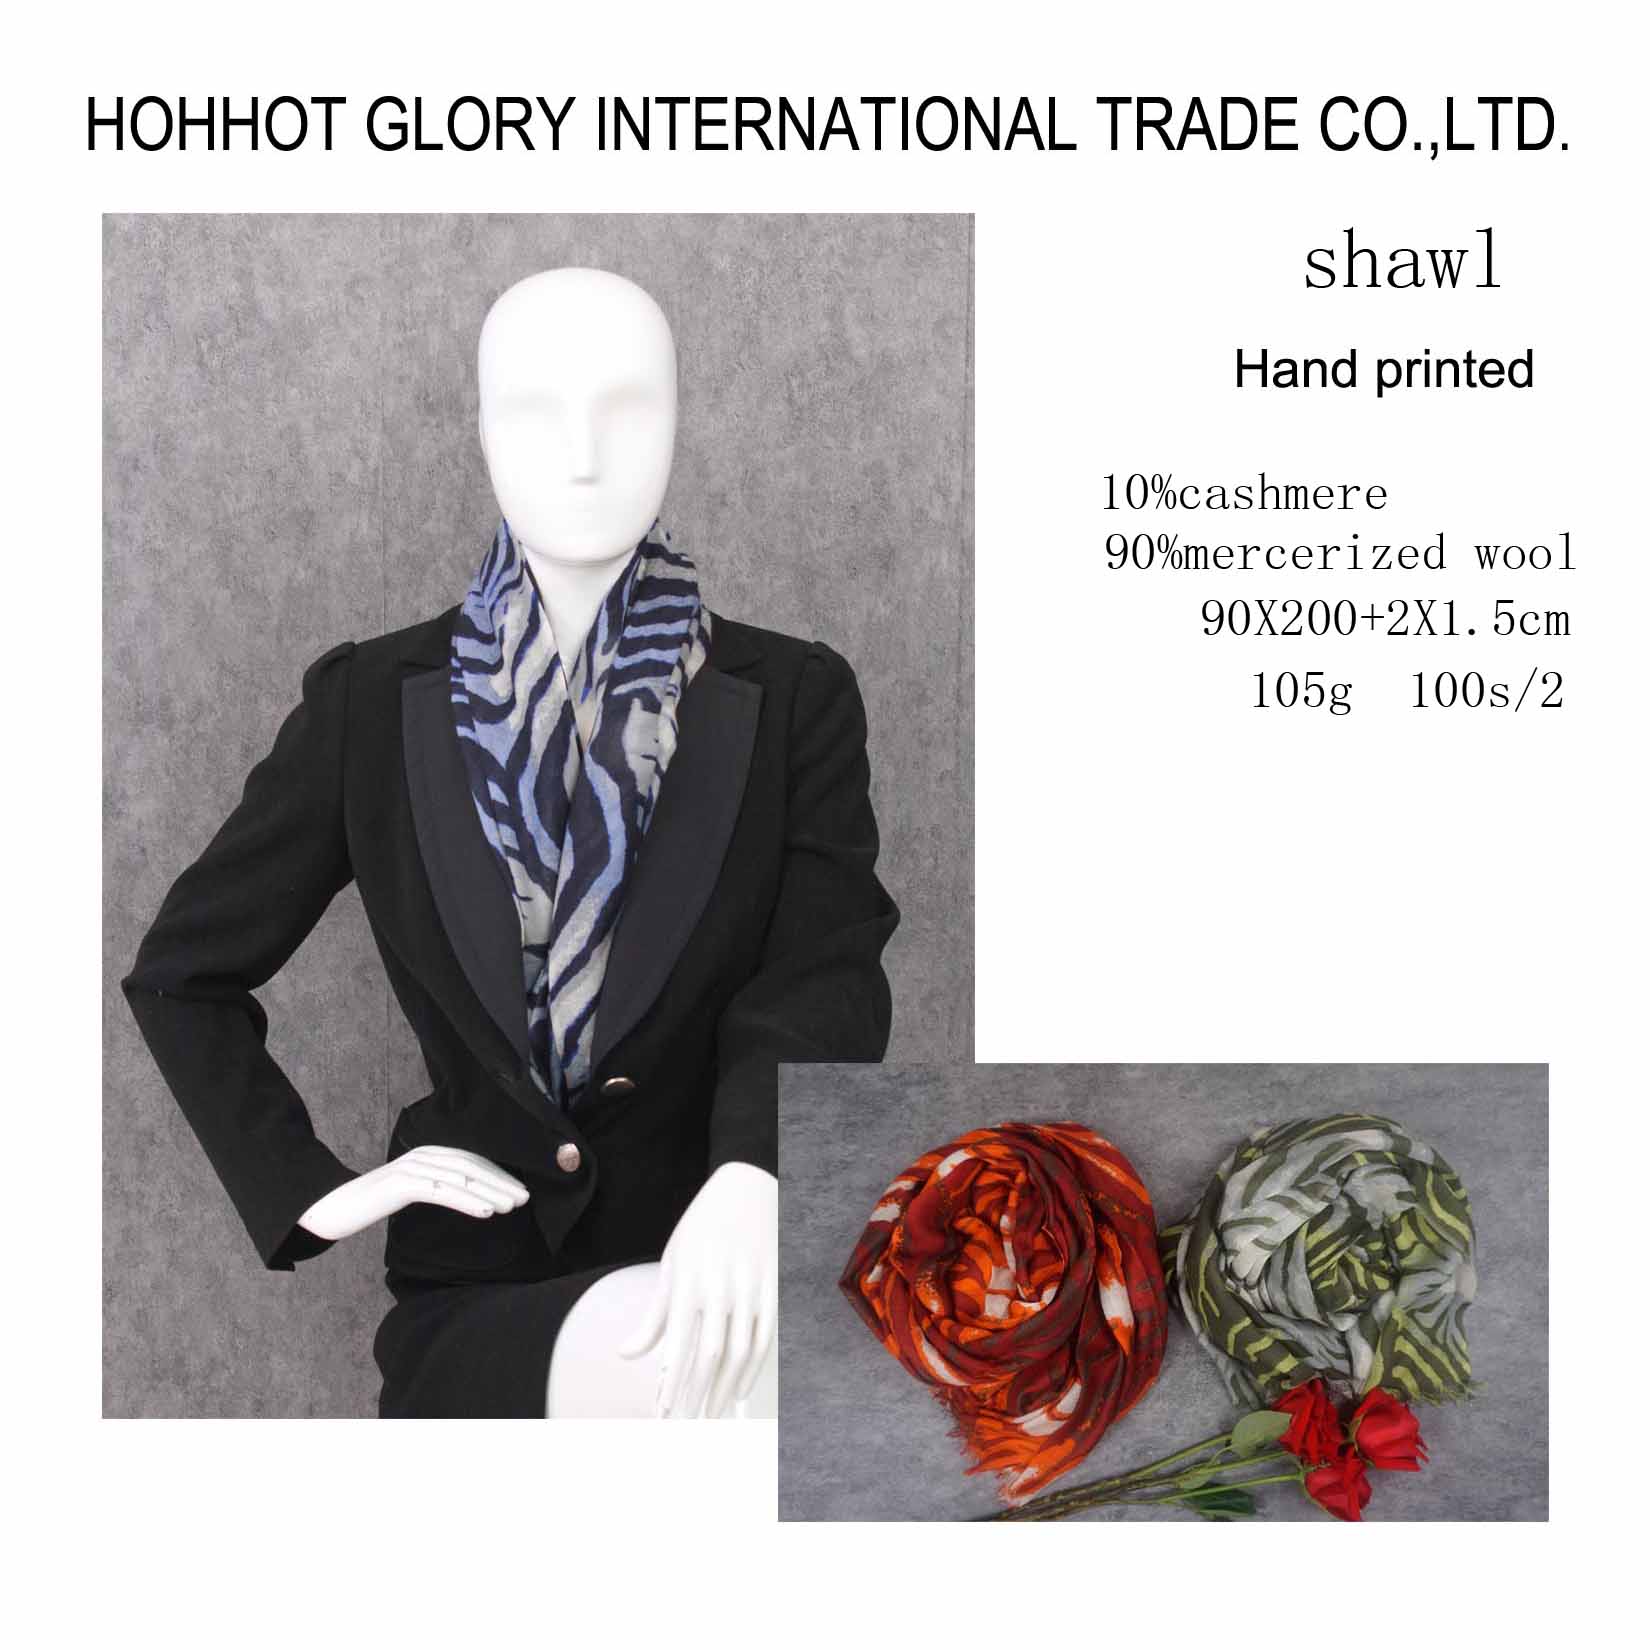 Hohhot Glory International Trade CO., LTD